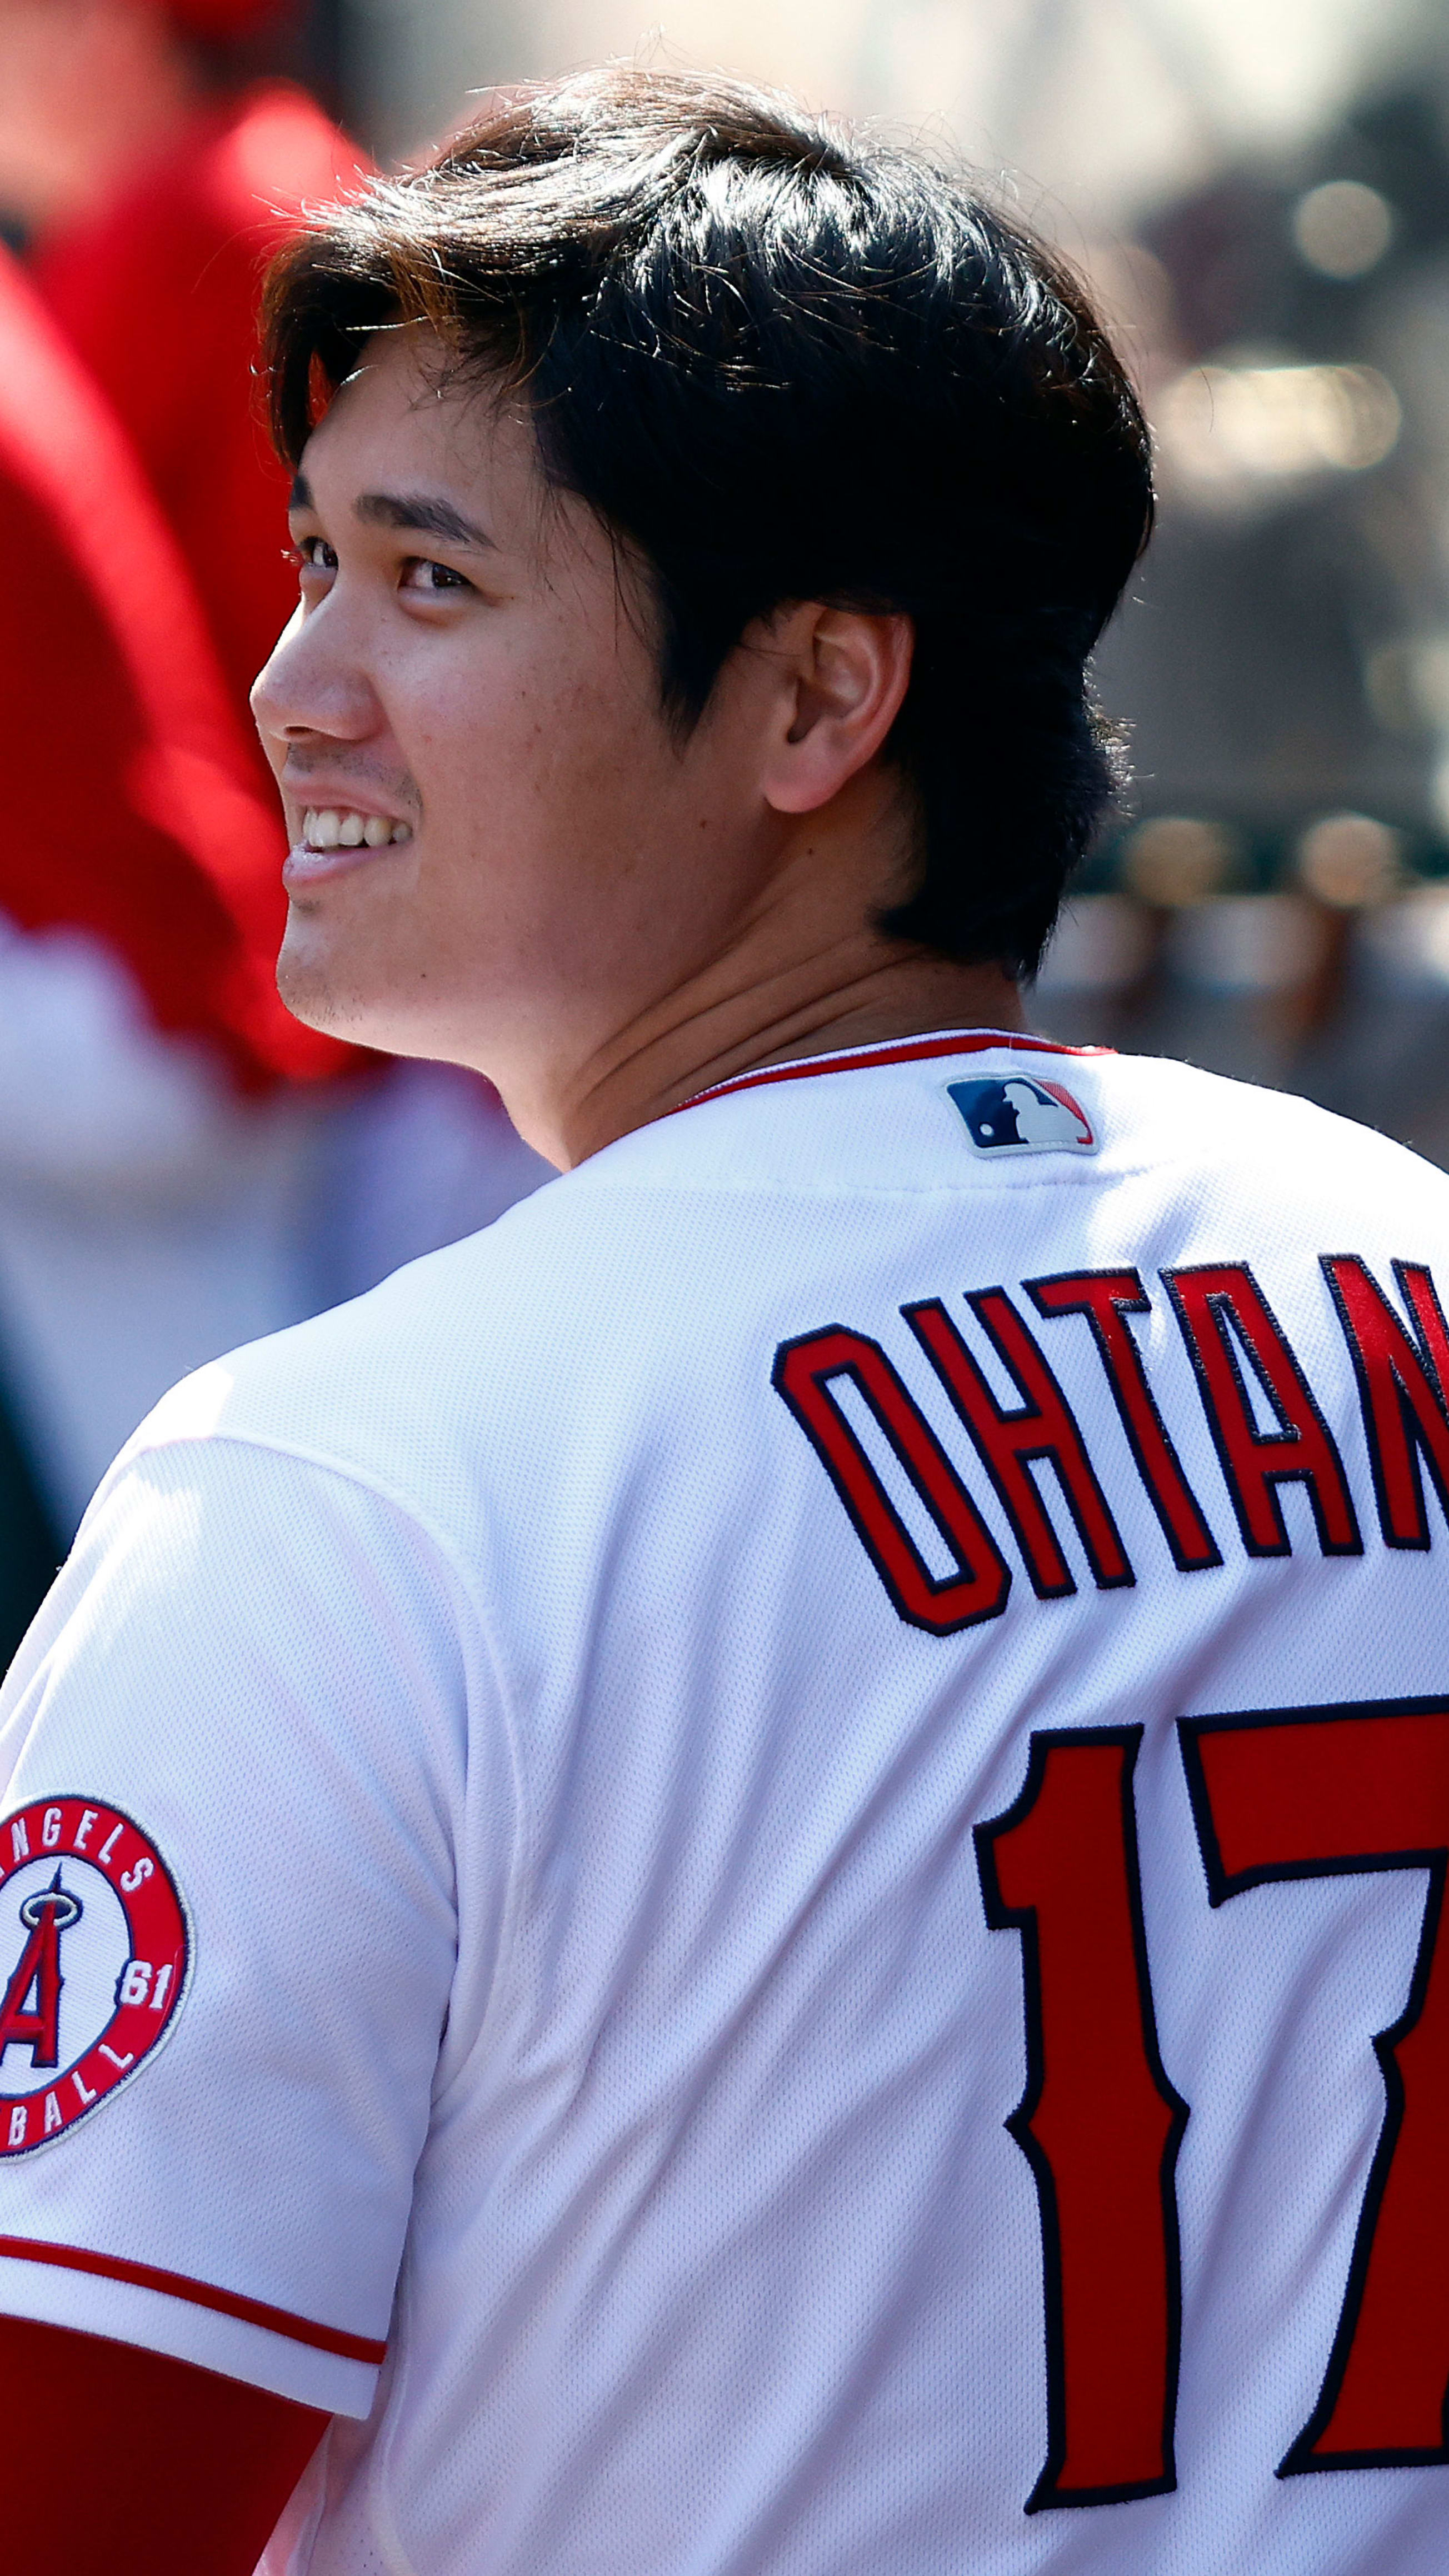 MLB Stories - Shohei Ohtani career timeline